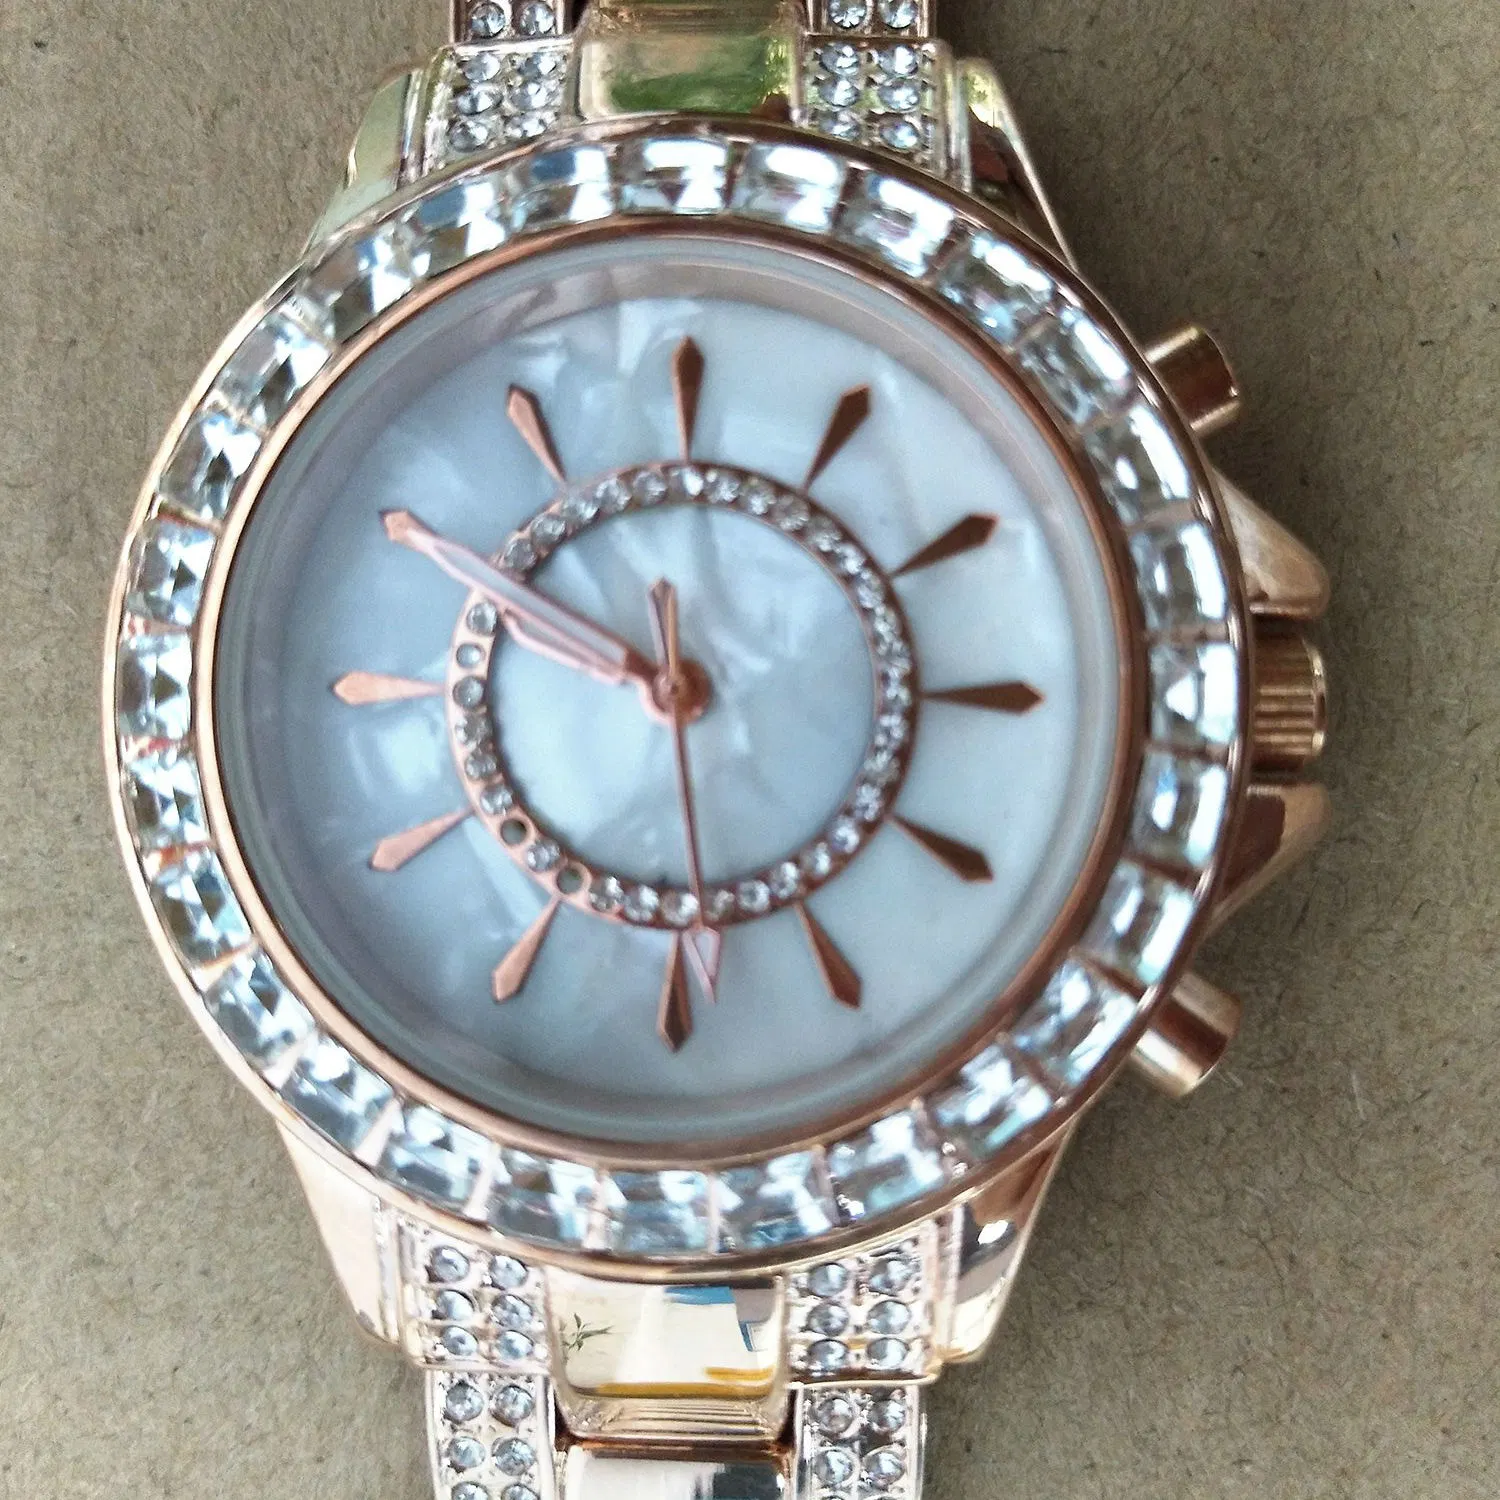 Fashion Watch Jewelry Rose Gold Ladies Wrist Gift Watches (cm0015)